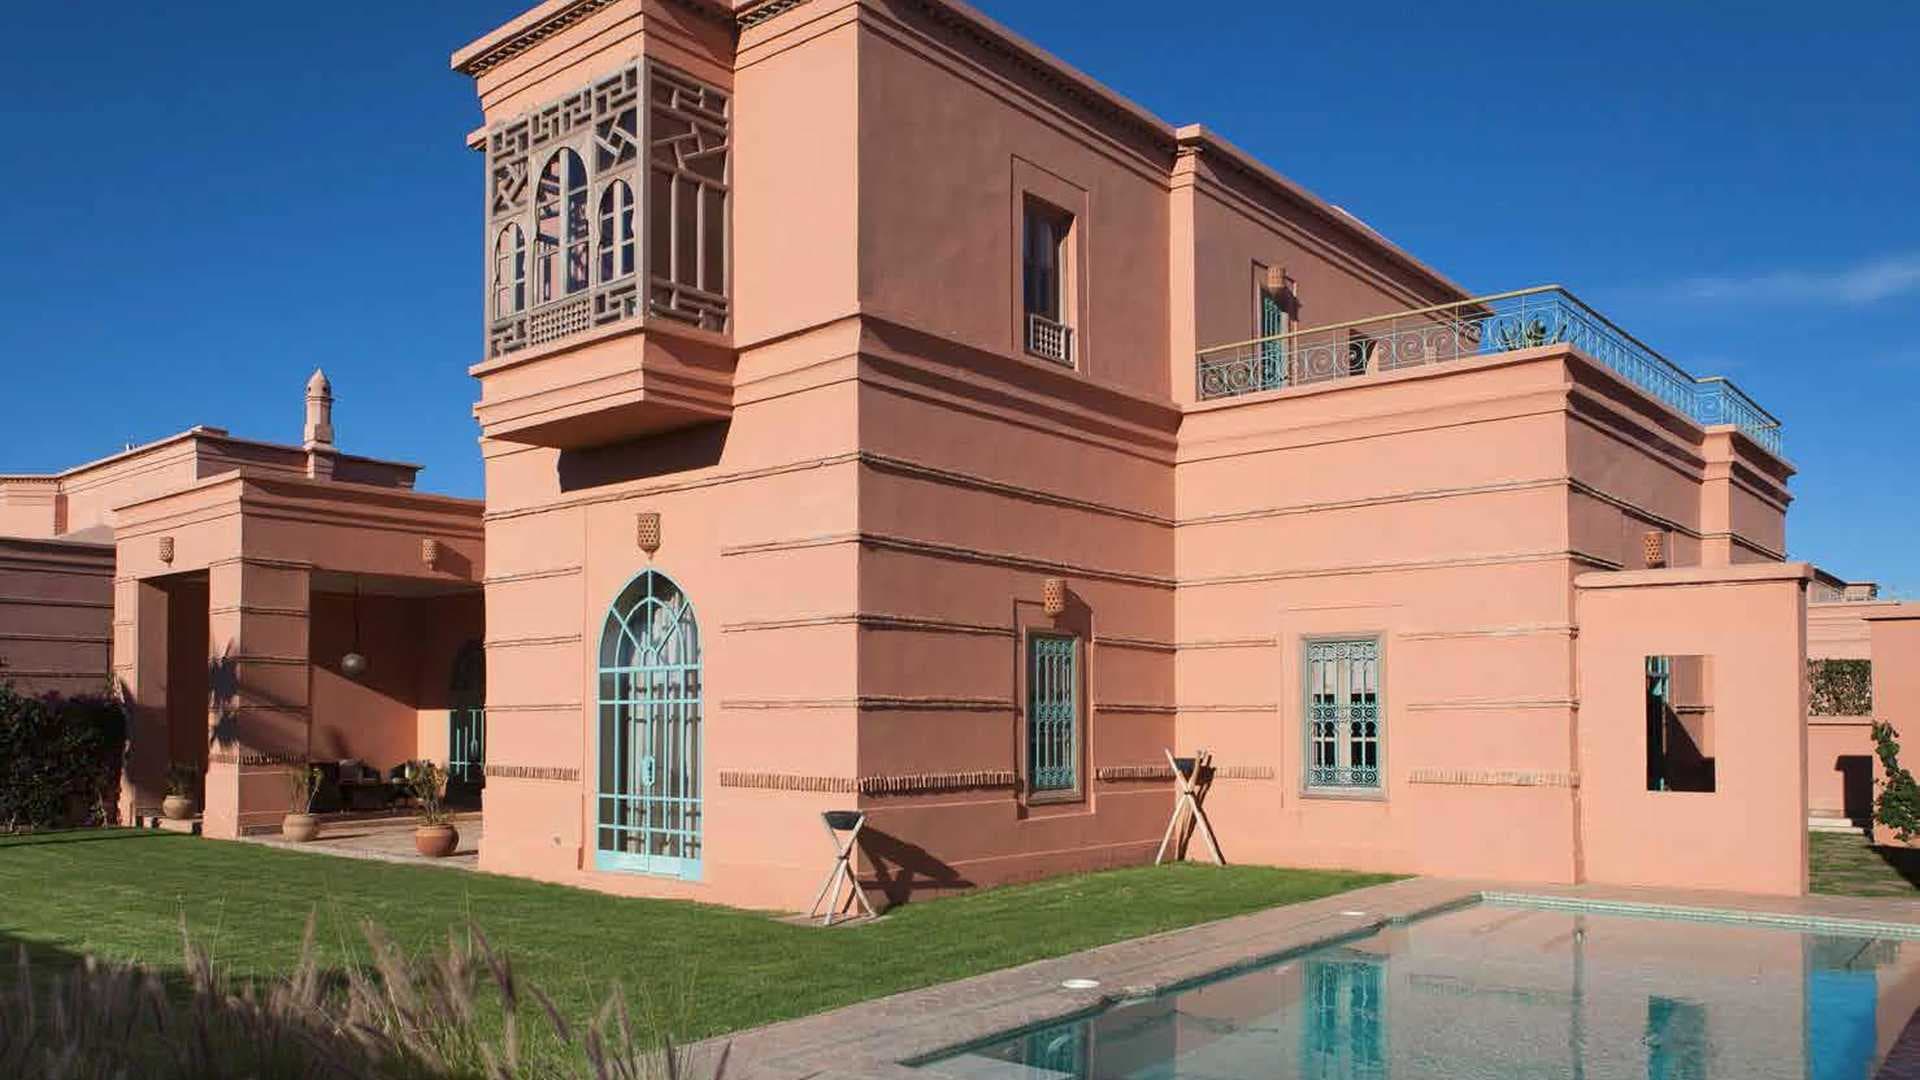 4 Bedroom Villa For Sale Boccara Hattan Lp01073 1f197f2c27f8bf00.jpg